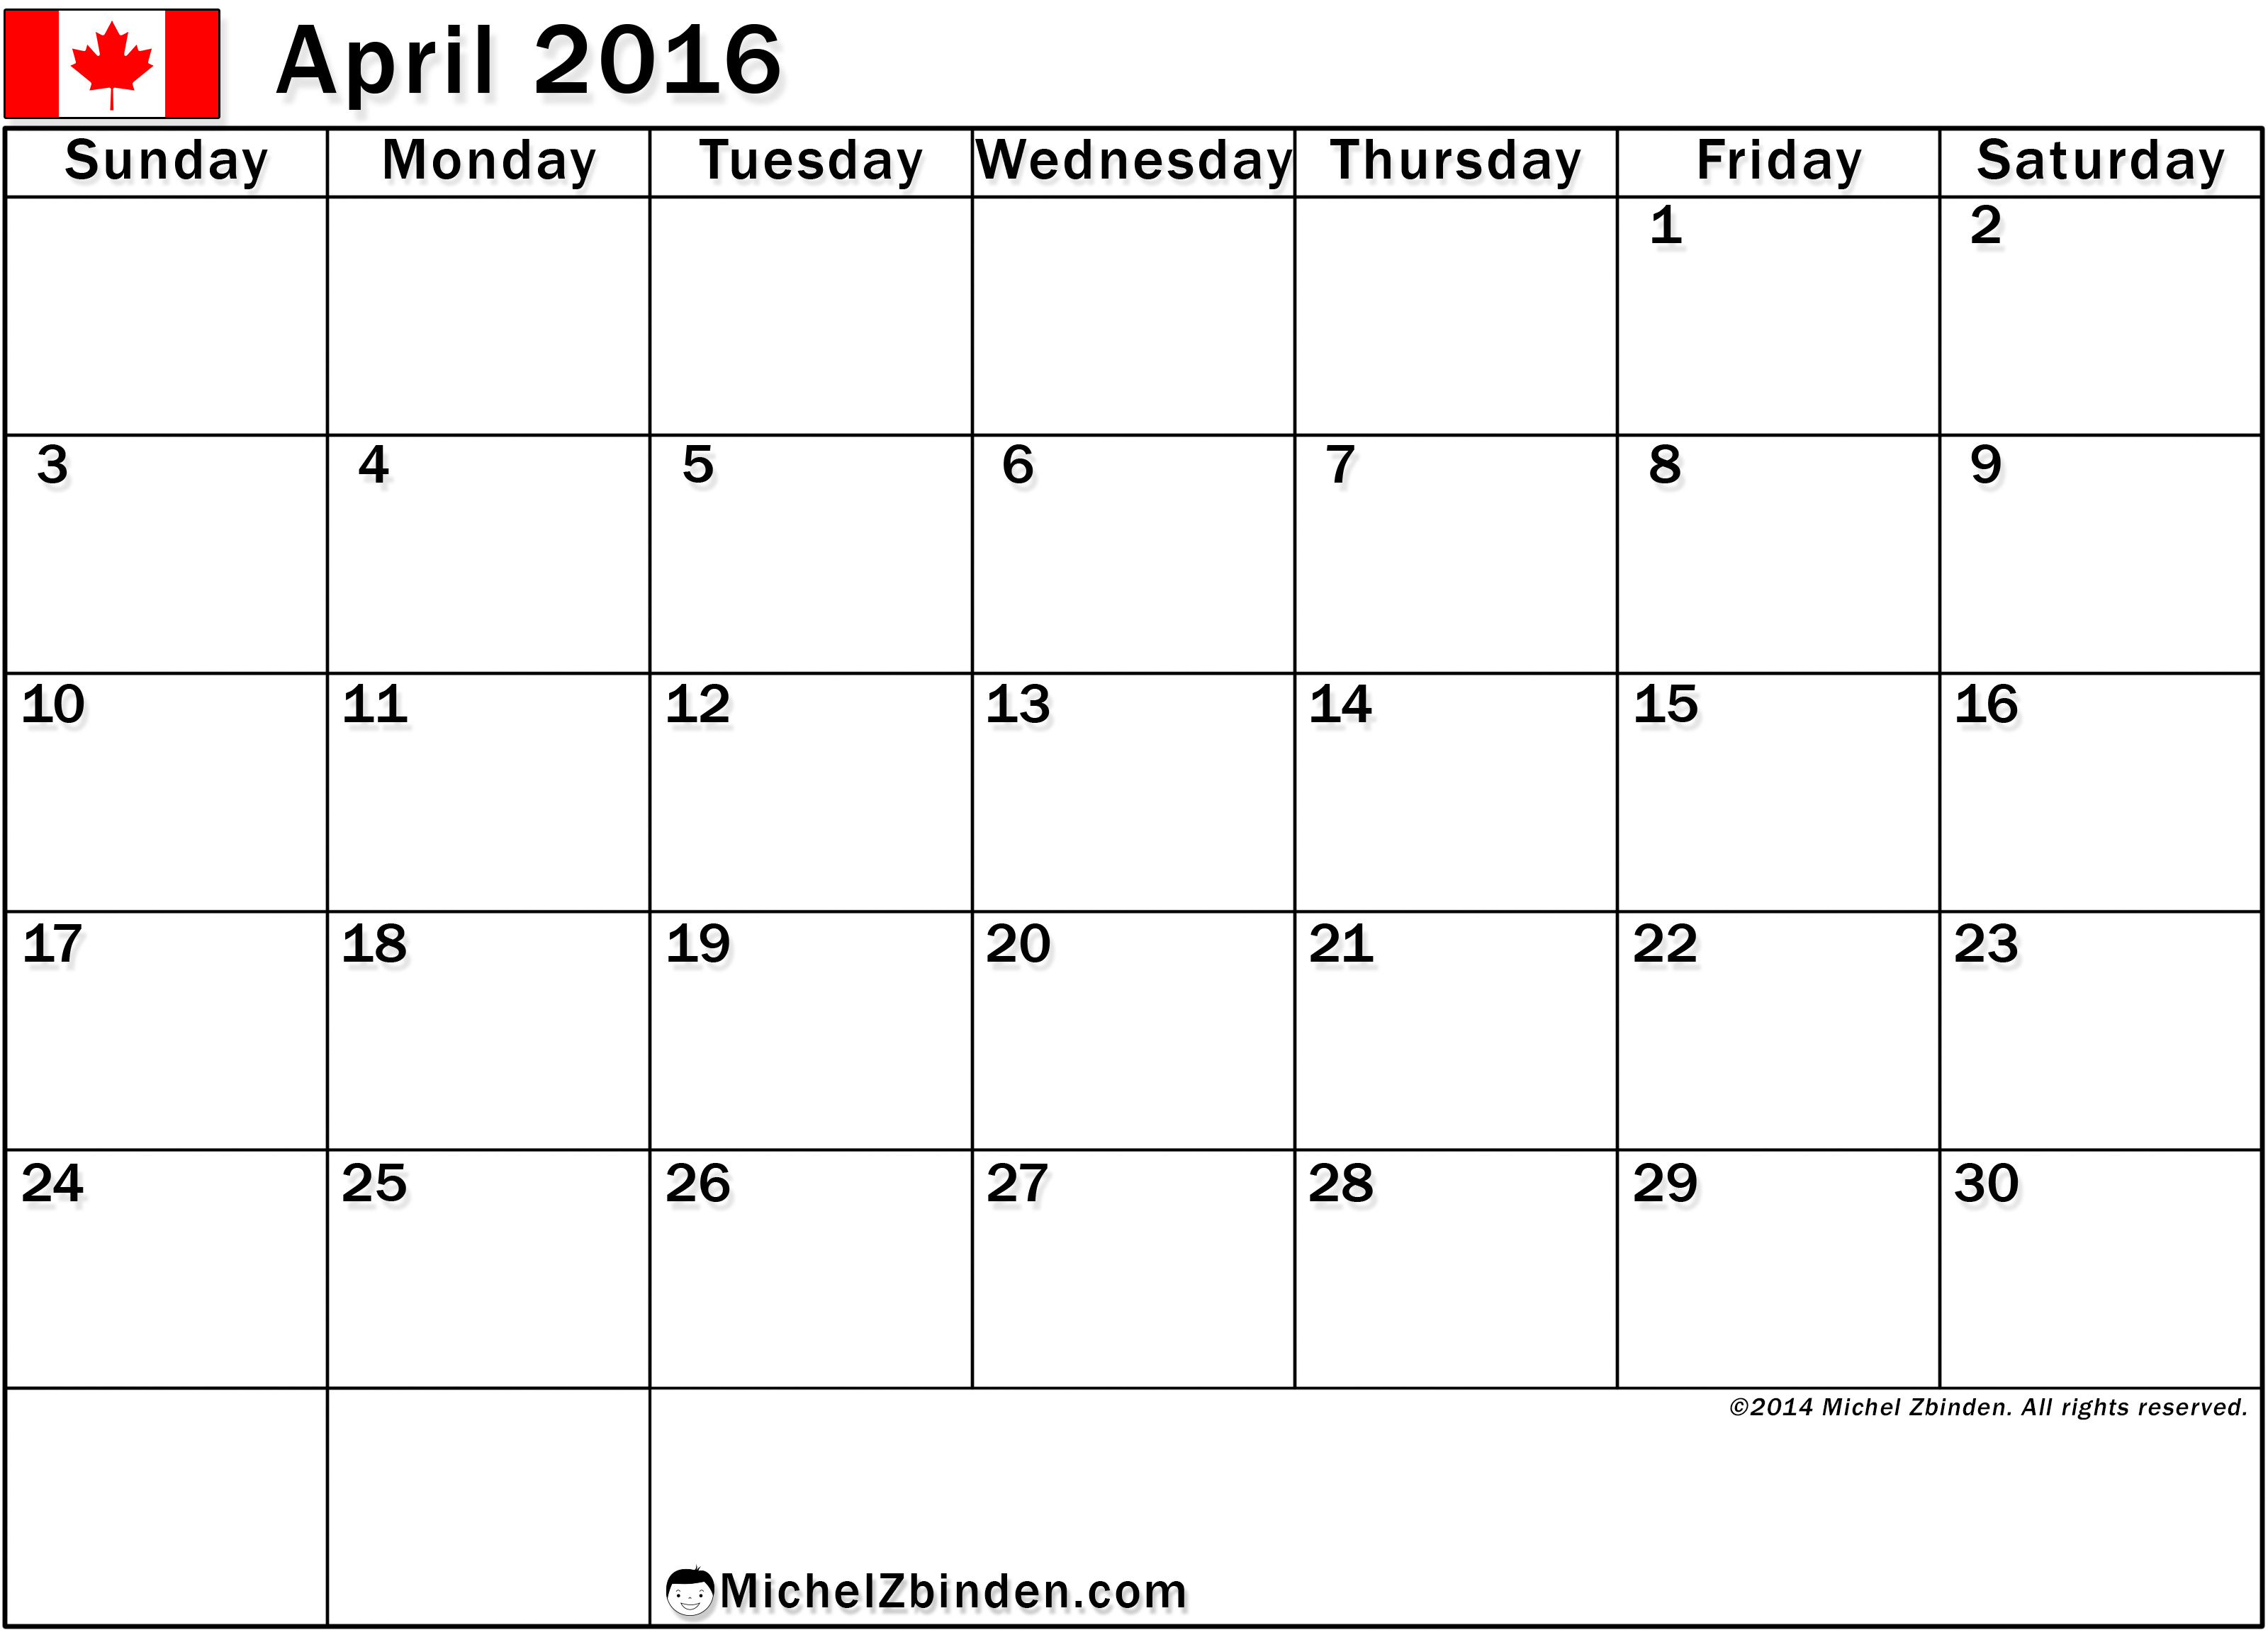 April 2017 Calendar Canada | printable calendar templates